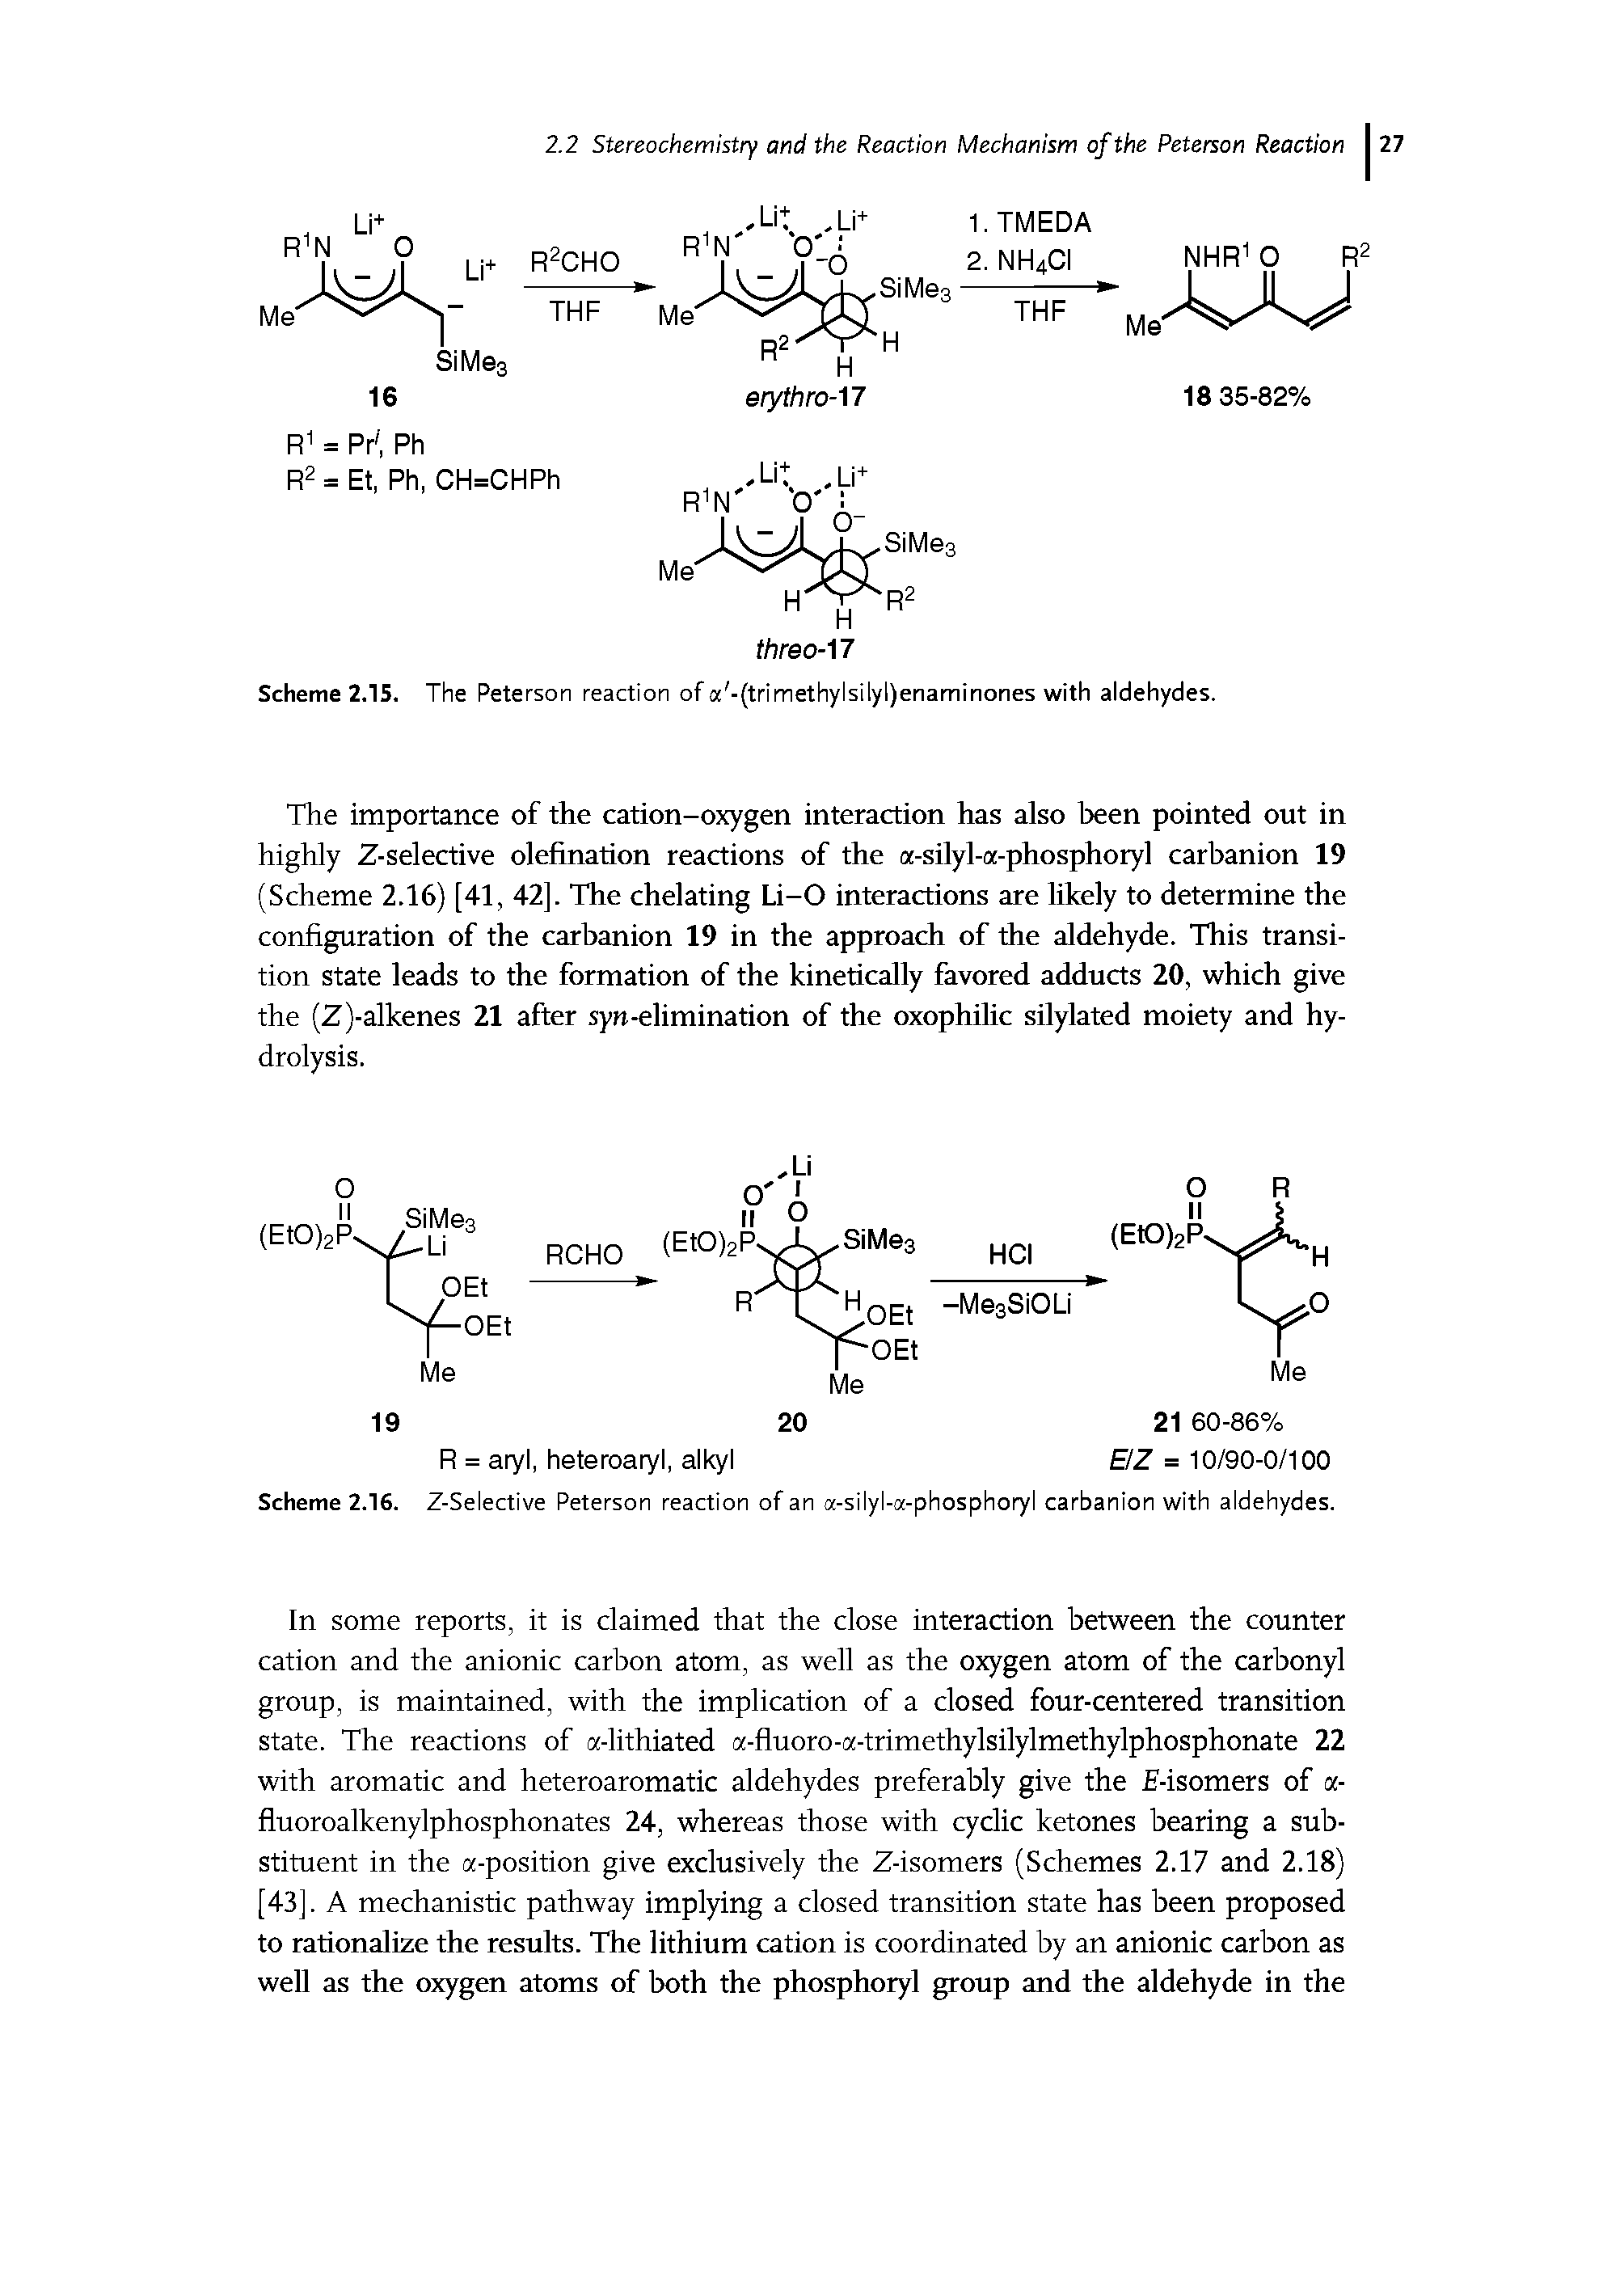 Scheme 2.16. Z-Selective Peterson reaction of an a-silyl-a-phosphoryl carbanion with aldehydes.